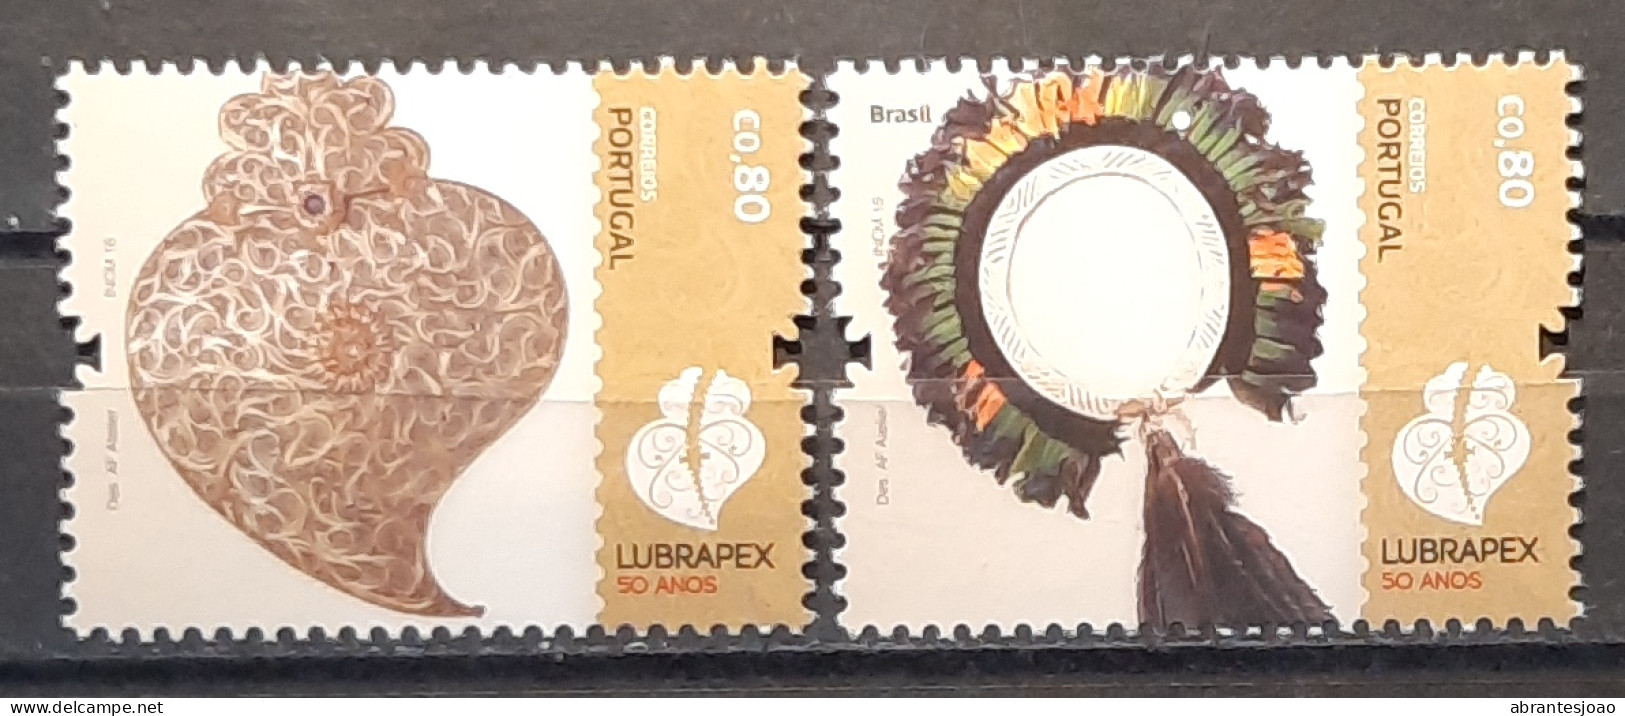 2016 - Portugal - MNH - Lubrapex - 50 Years - 2 Stamps - Ongebruikt